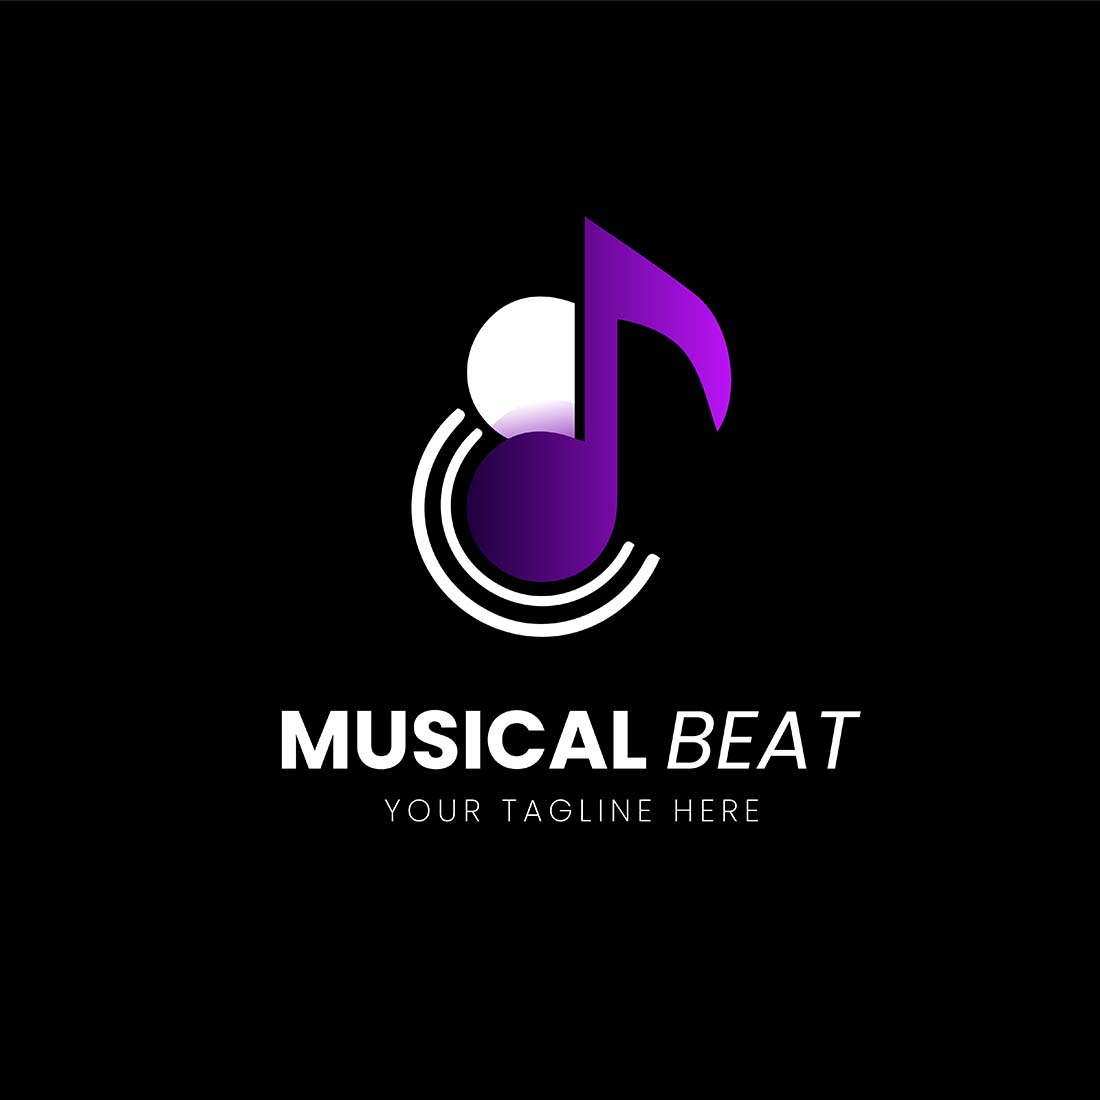 Musical Beat Logo main cover.